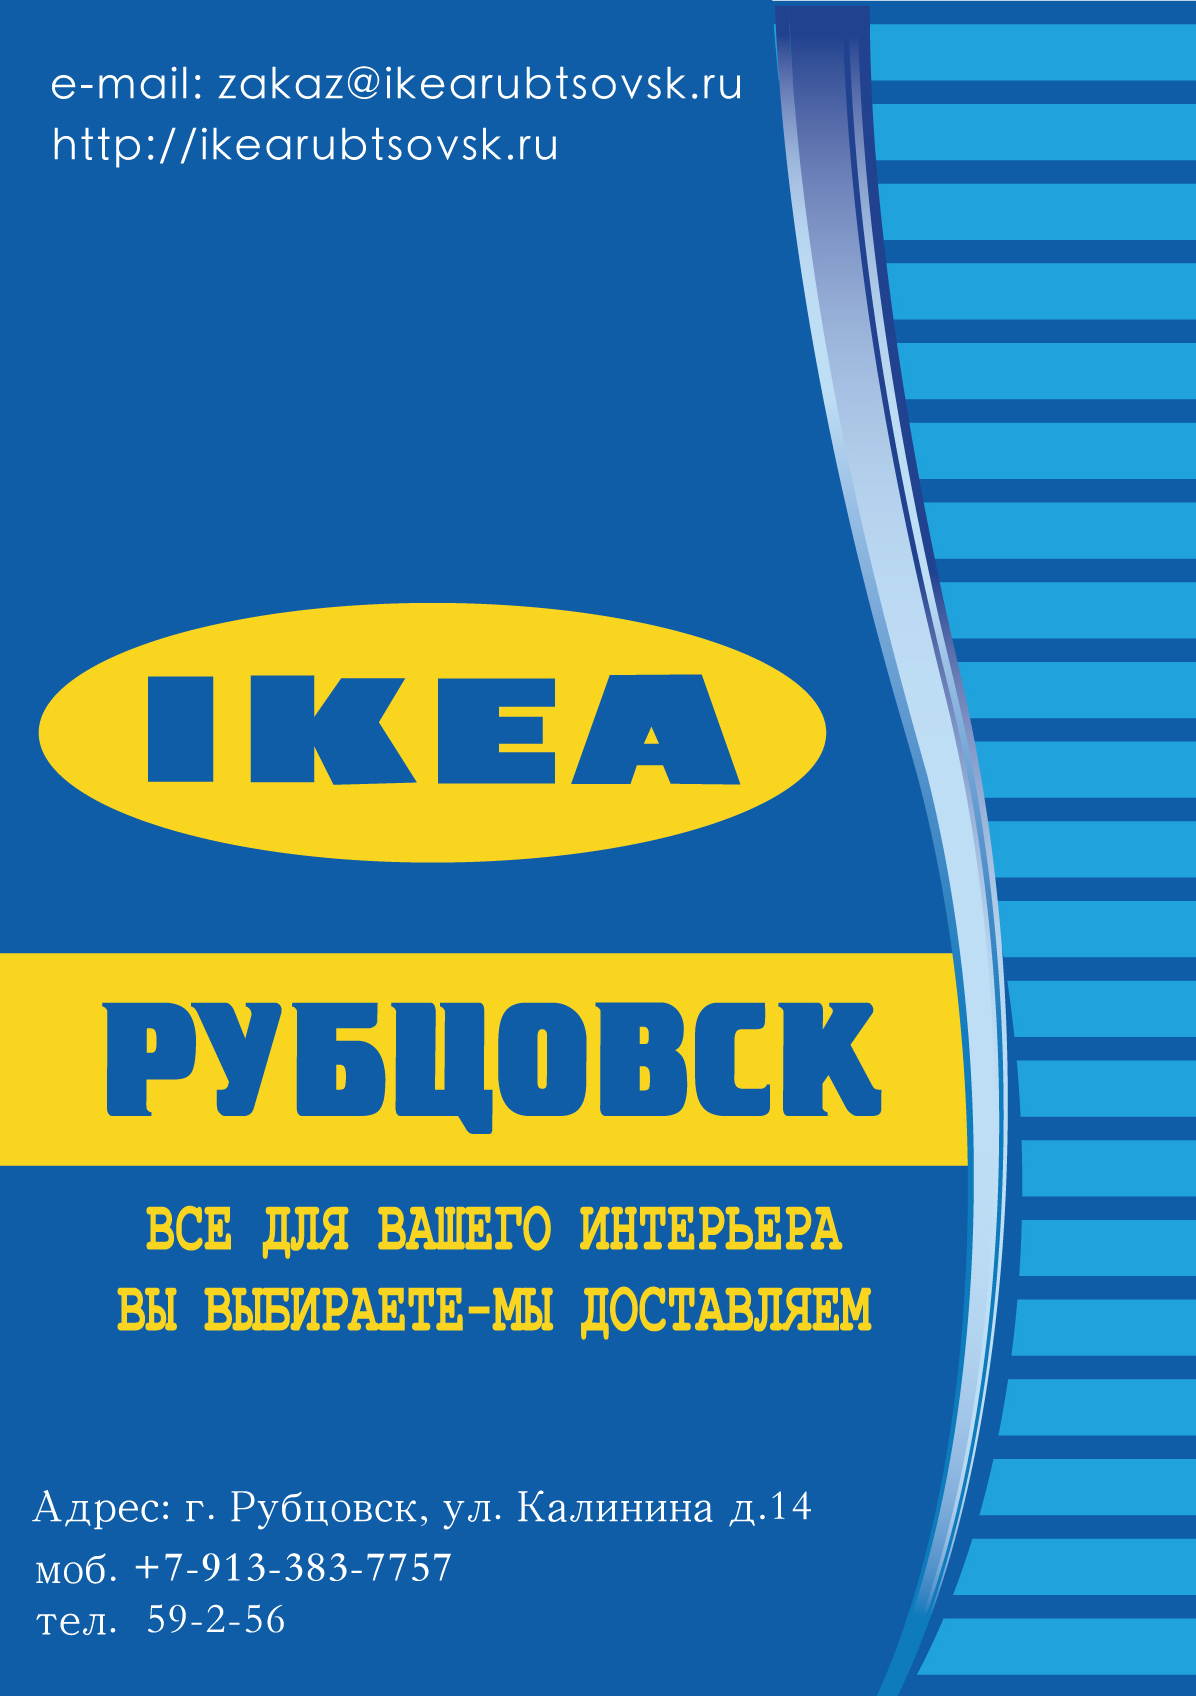 Flyer «IKEA Rubtsovsk» №1